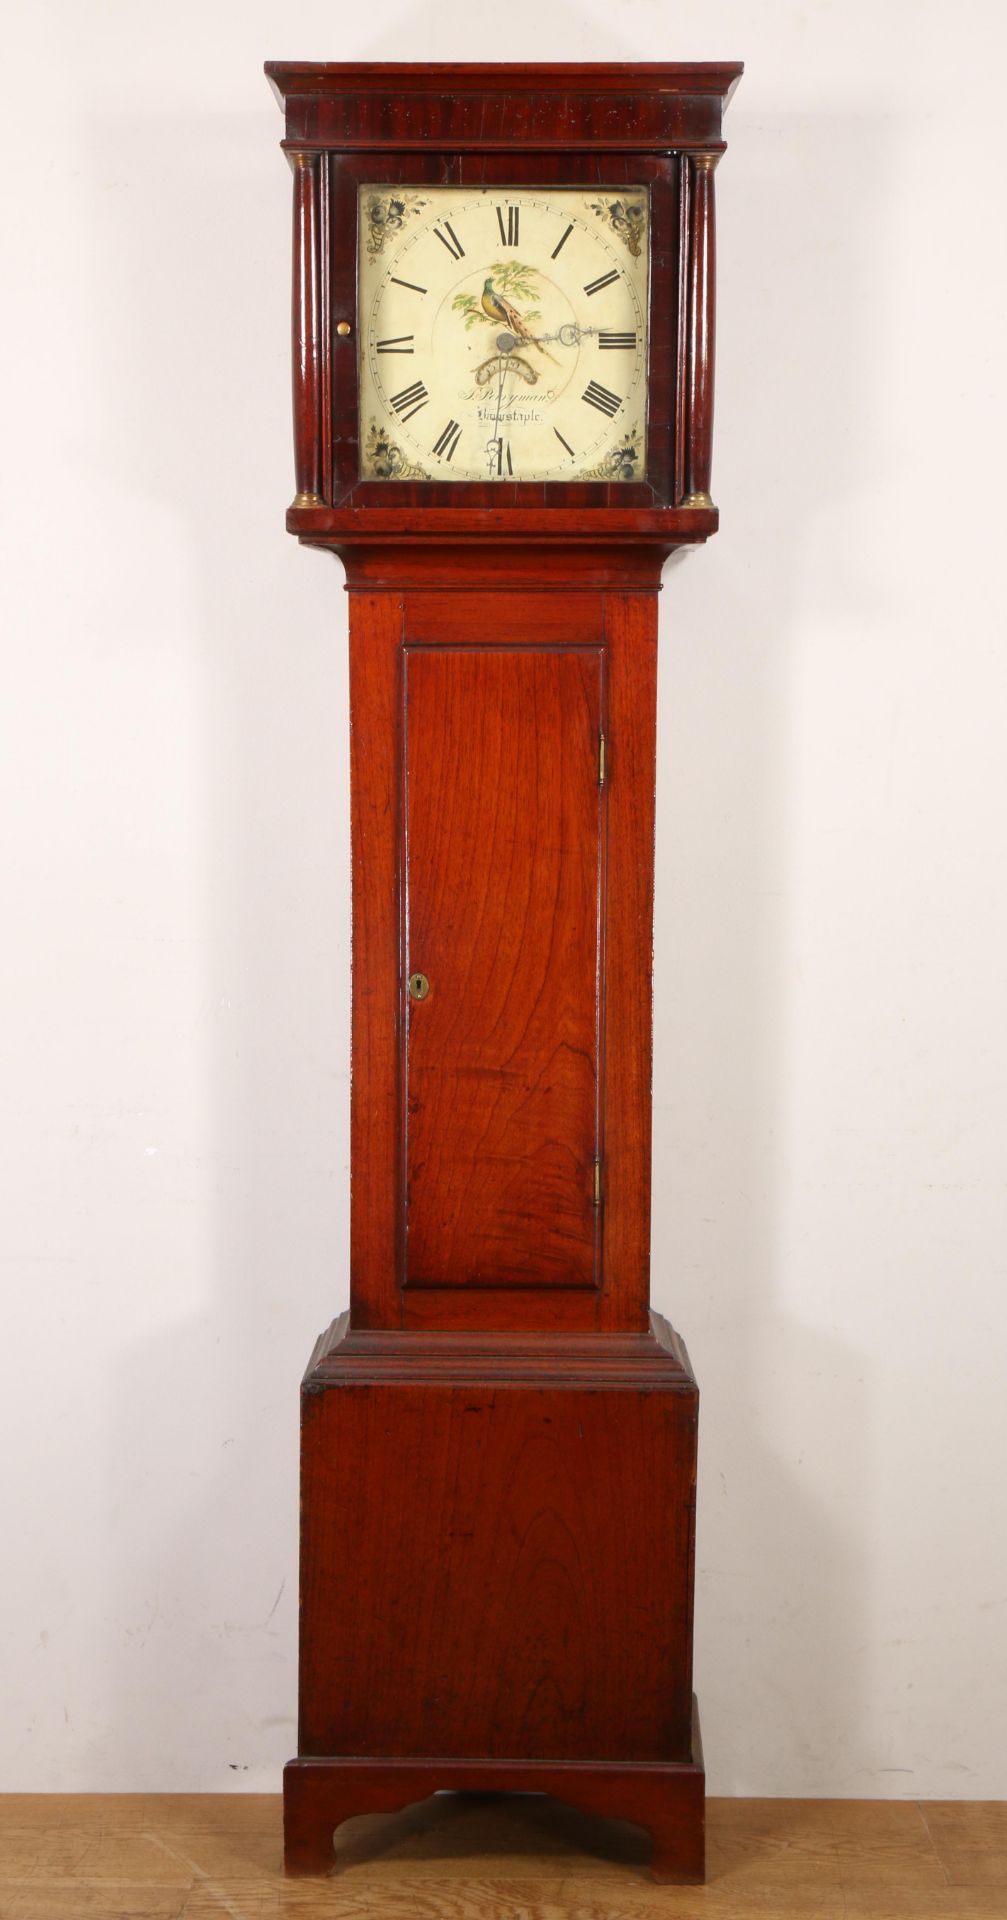 Engeland, staande klok, J. Parryman, 19e eeuw.